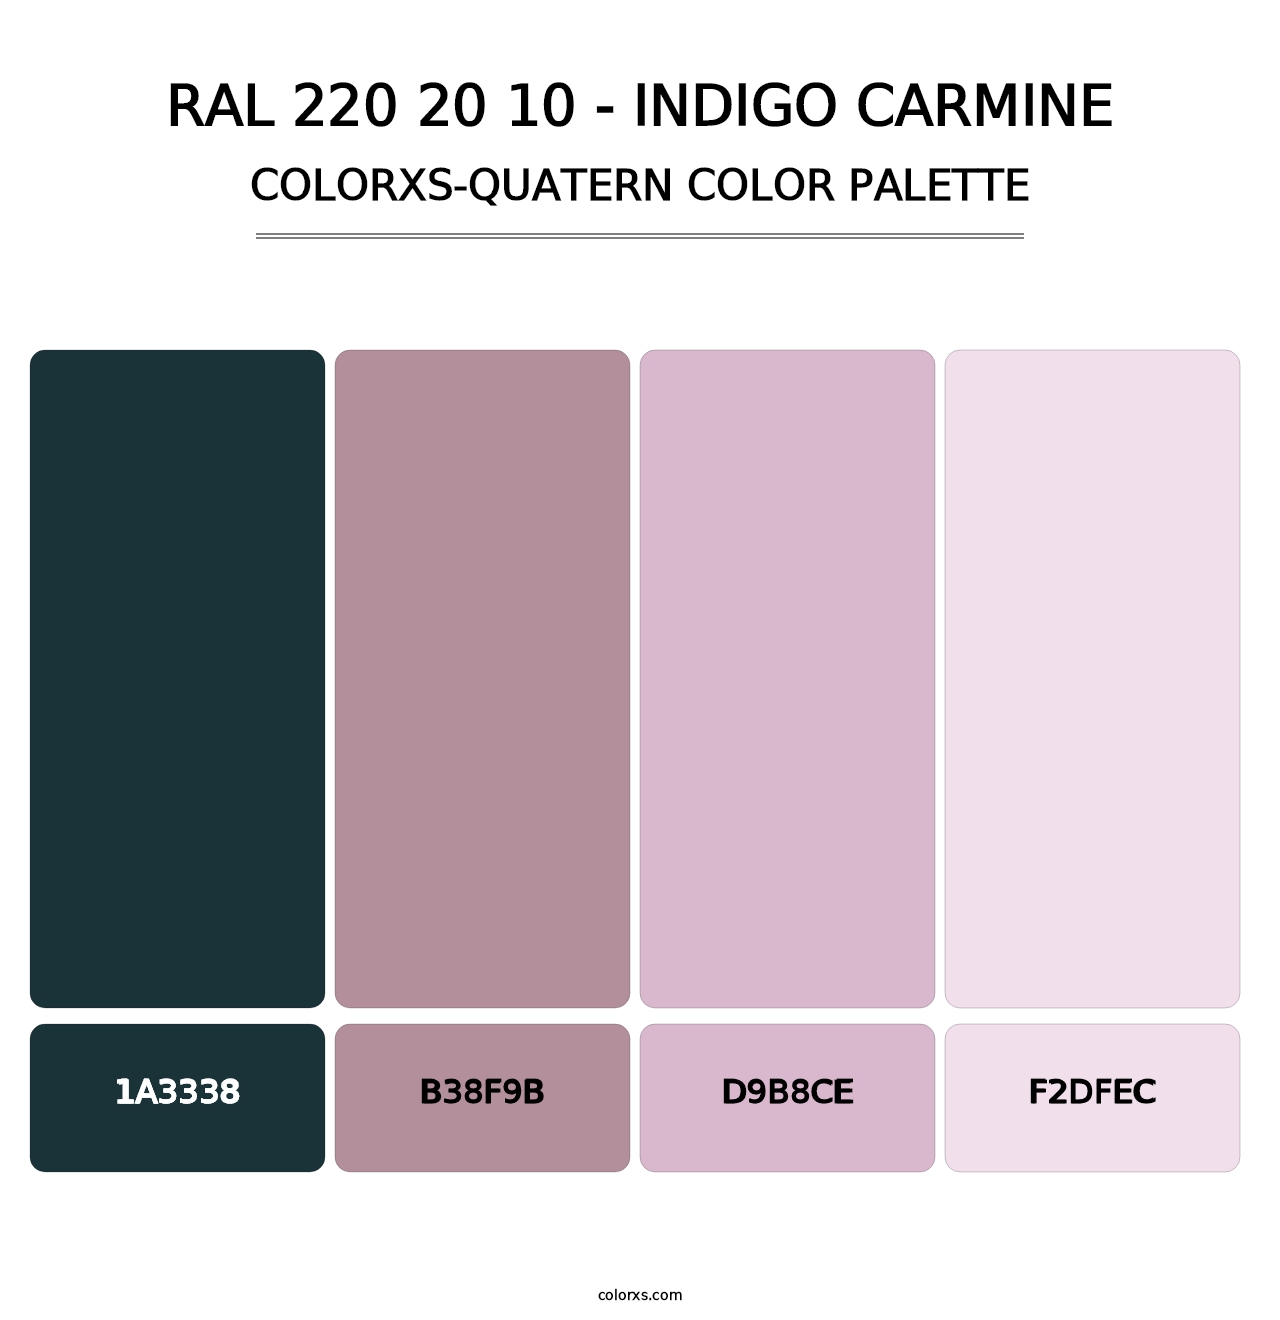 RAL 220 20 10 - Indigo Carmine - Colorxs Quatern Palette